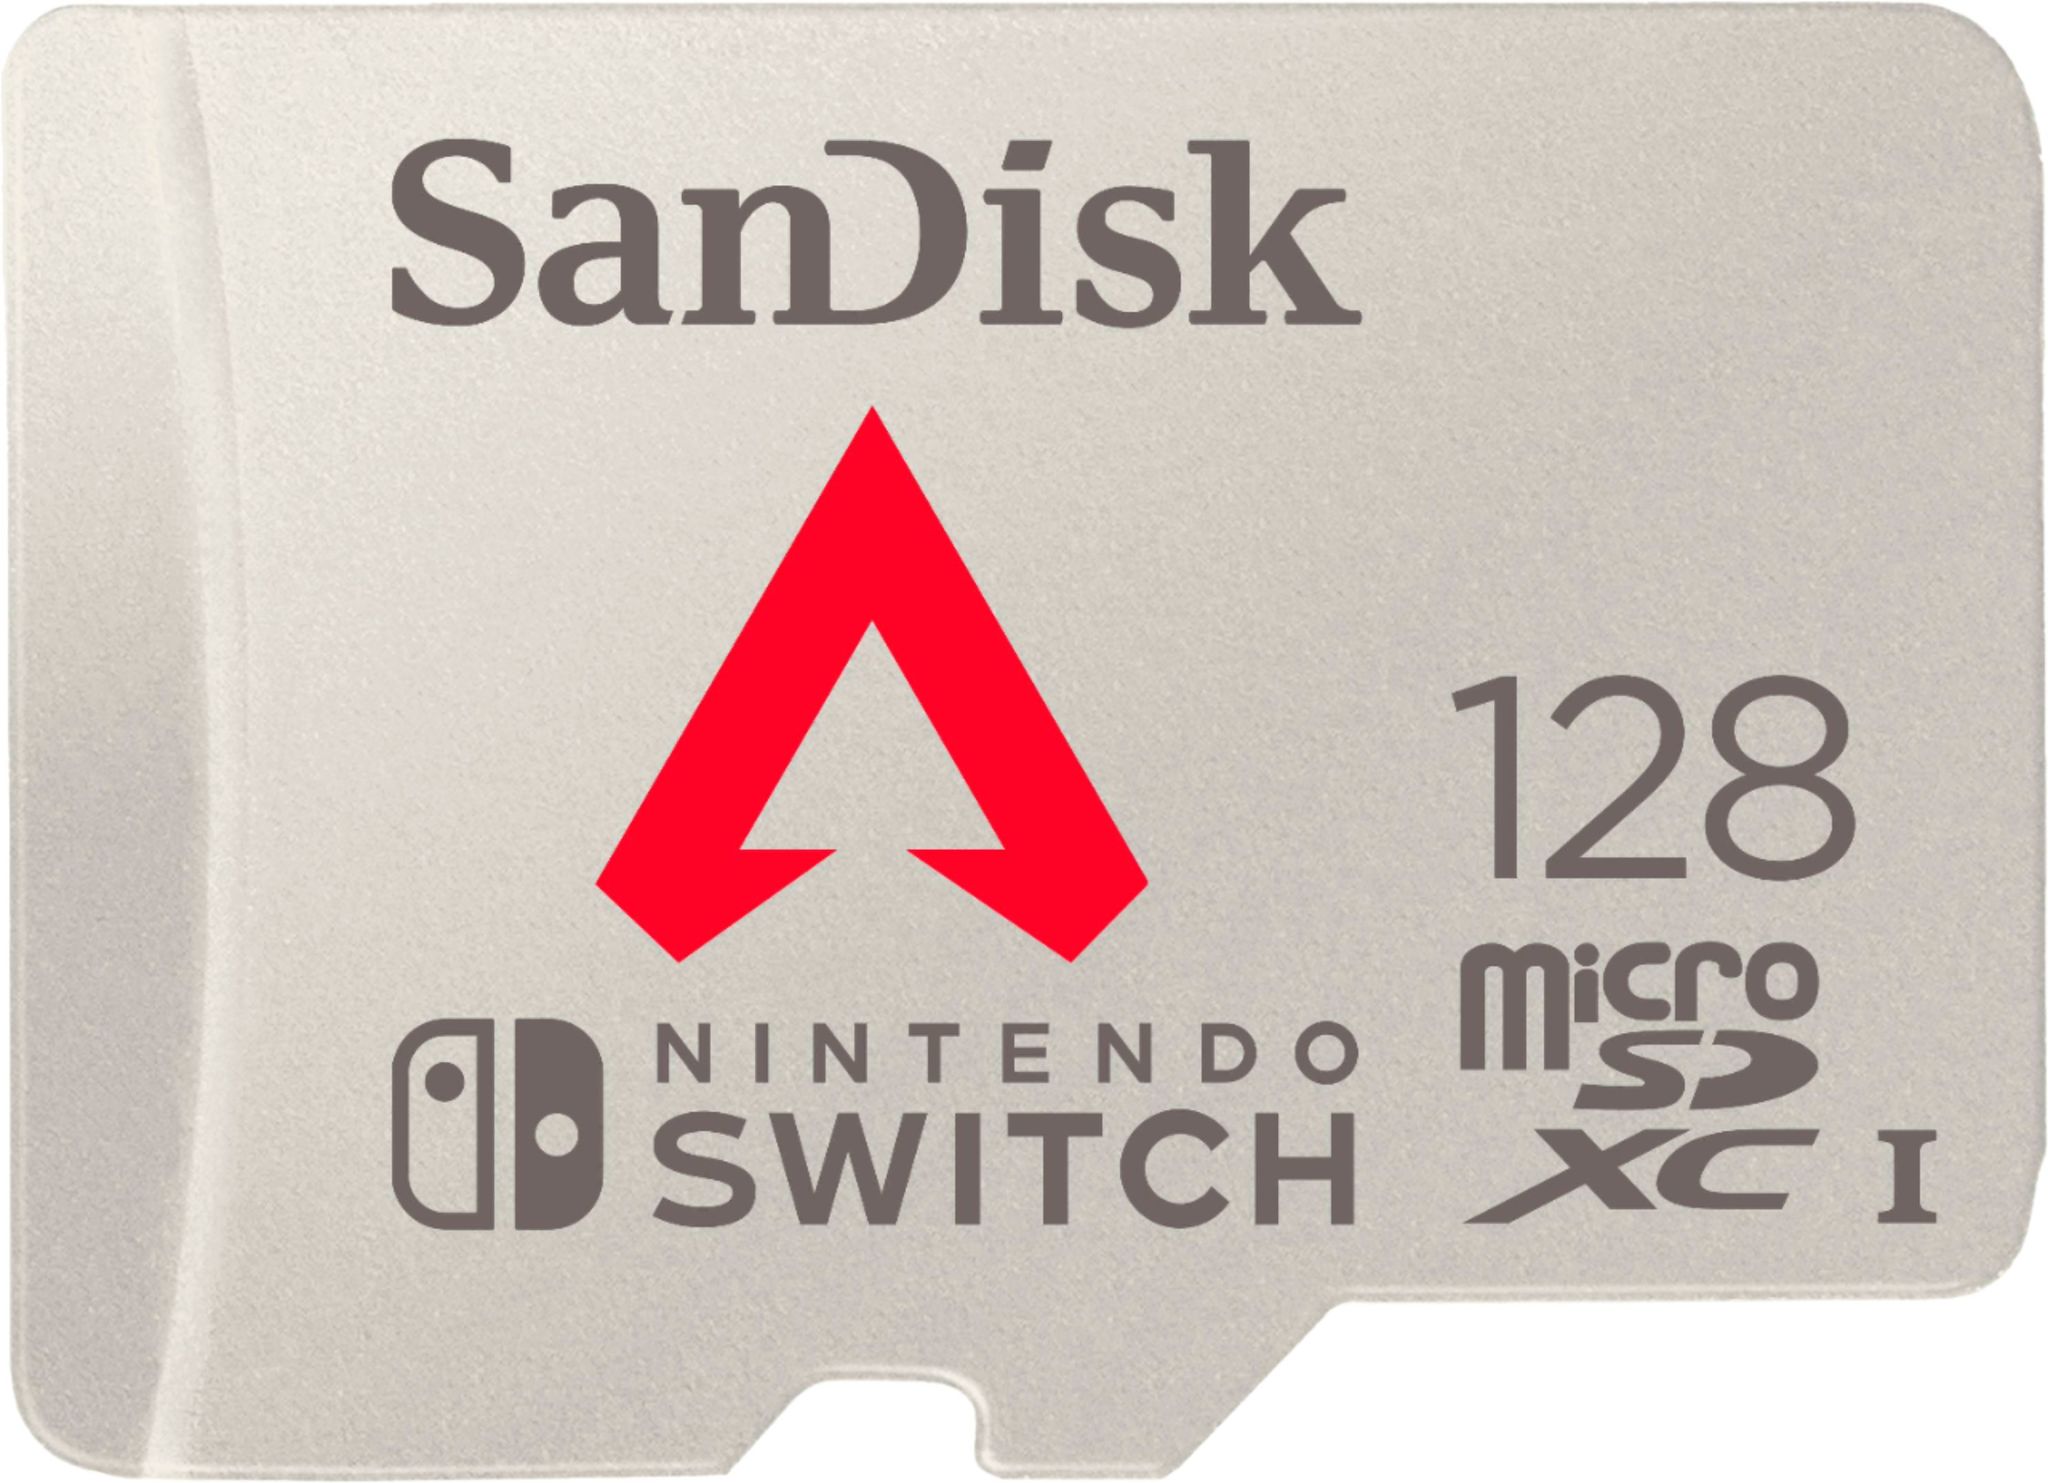 Apex Legends Sandisk Microsd Card